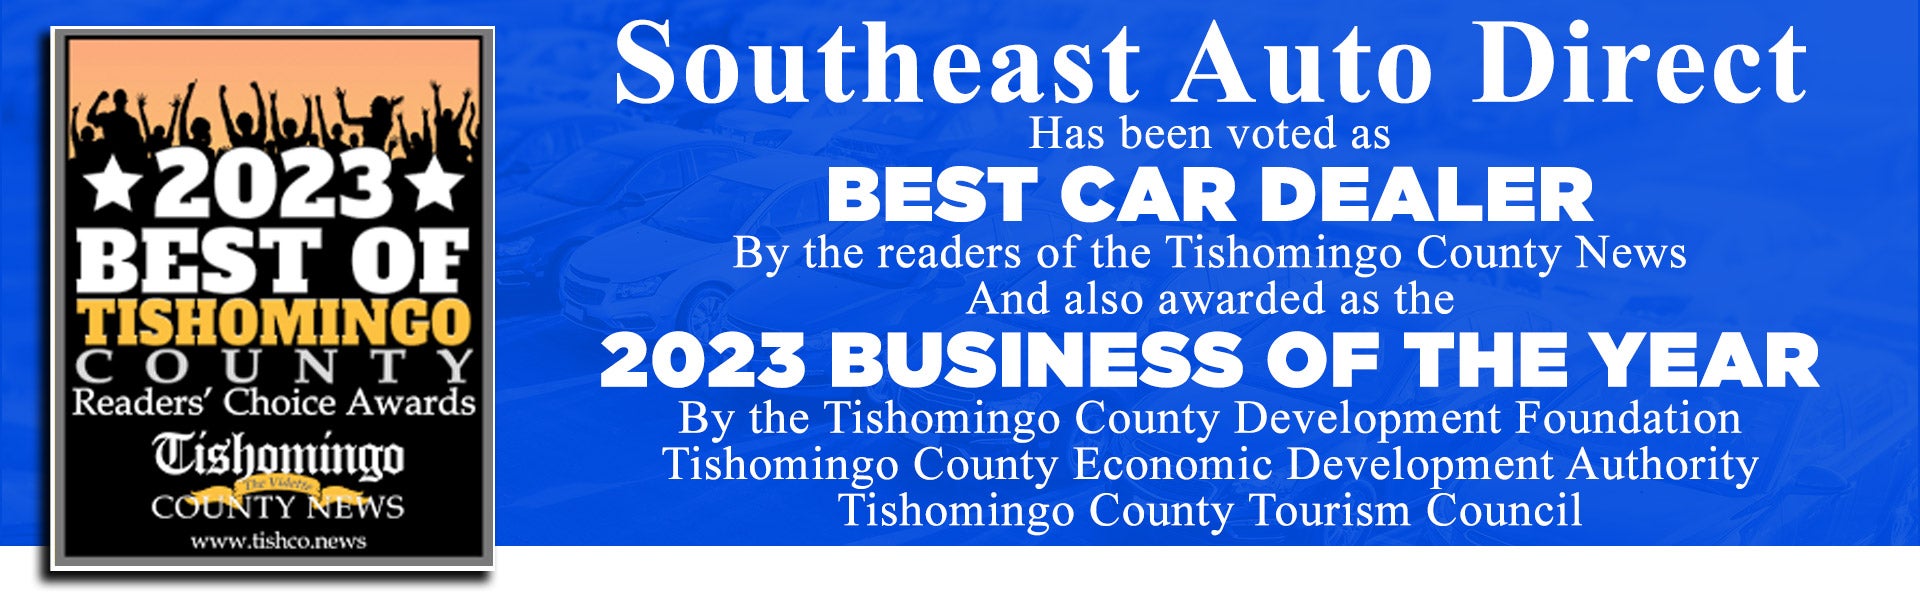 2023 Best Car Dealer Award - Tishomingo County